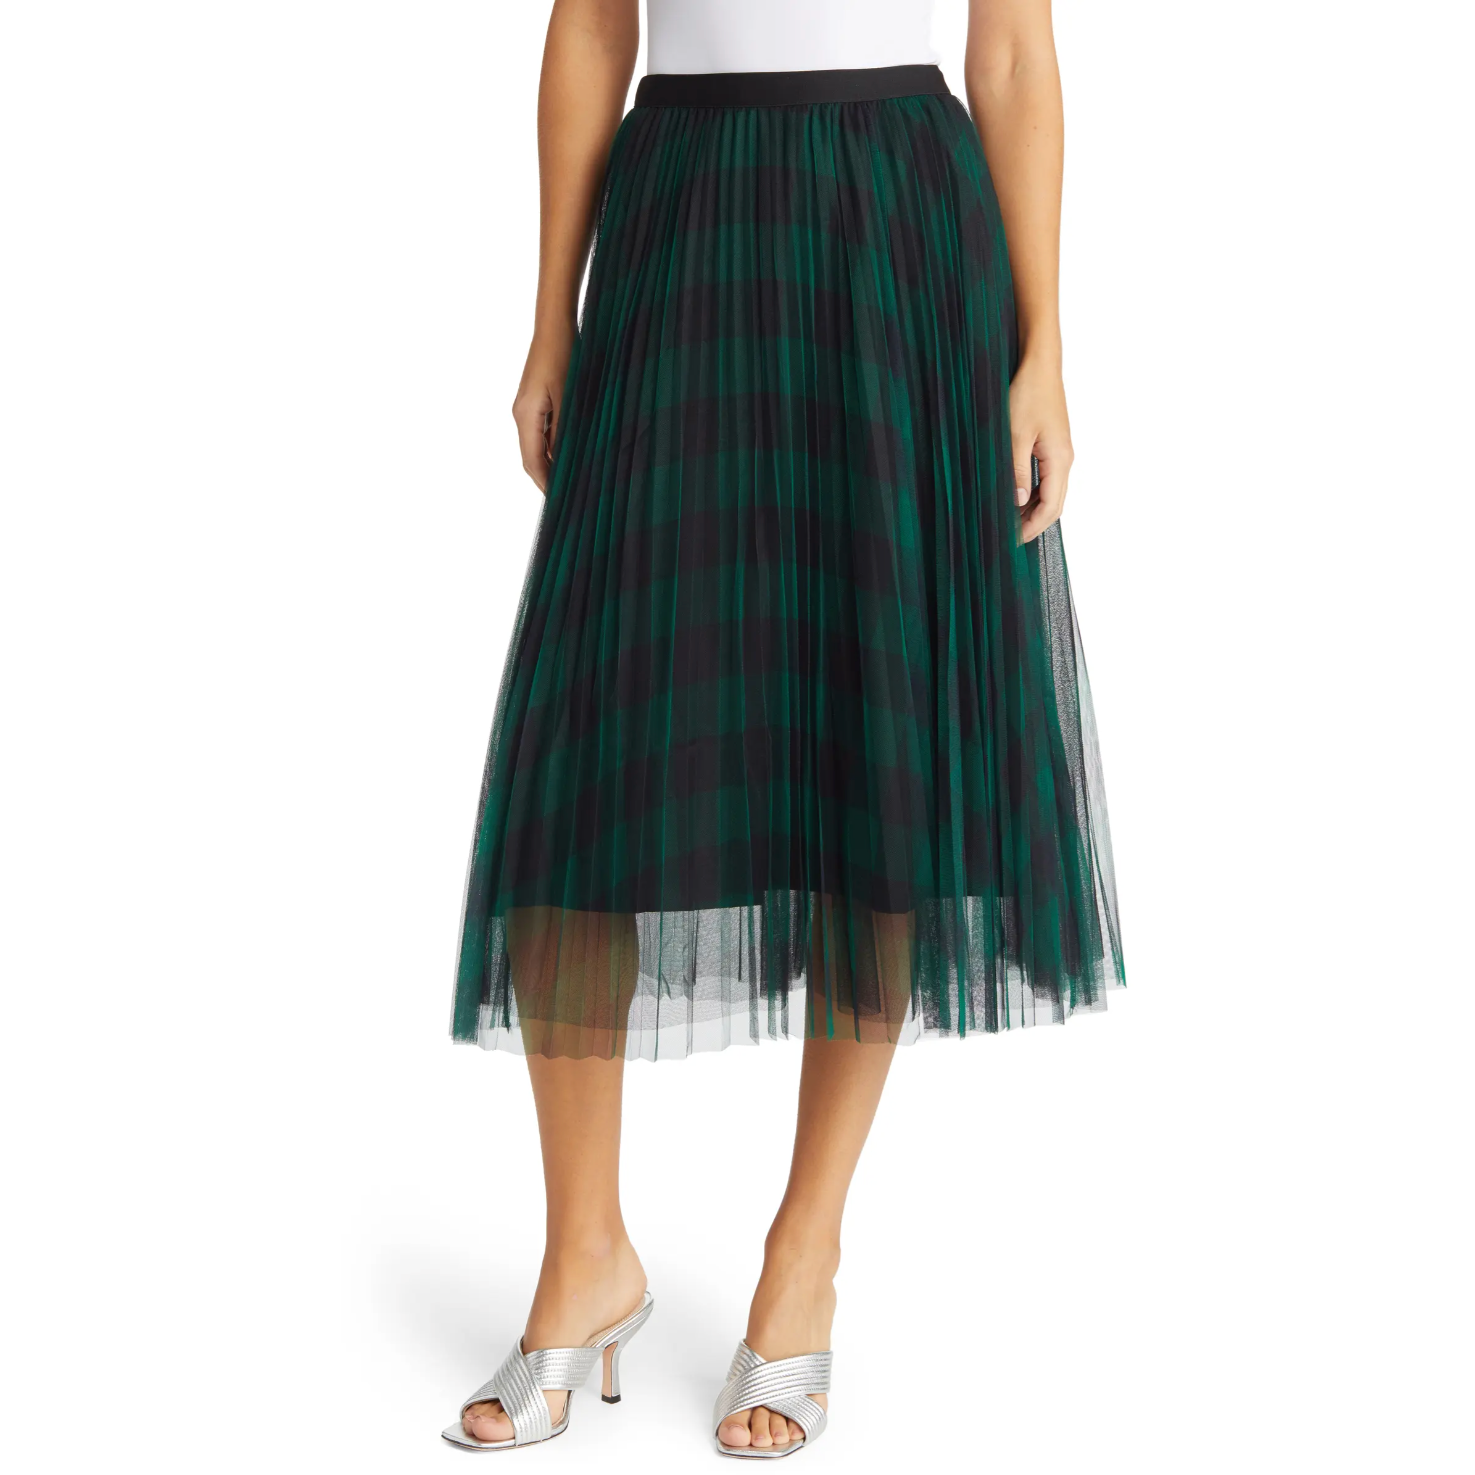 Belinda Plaid A-Line Skirt